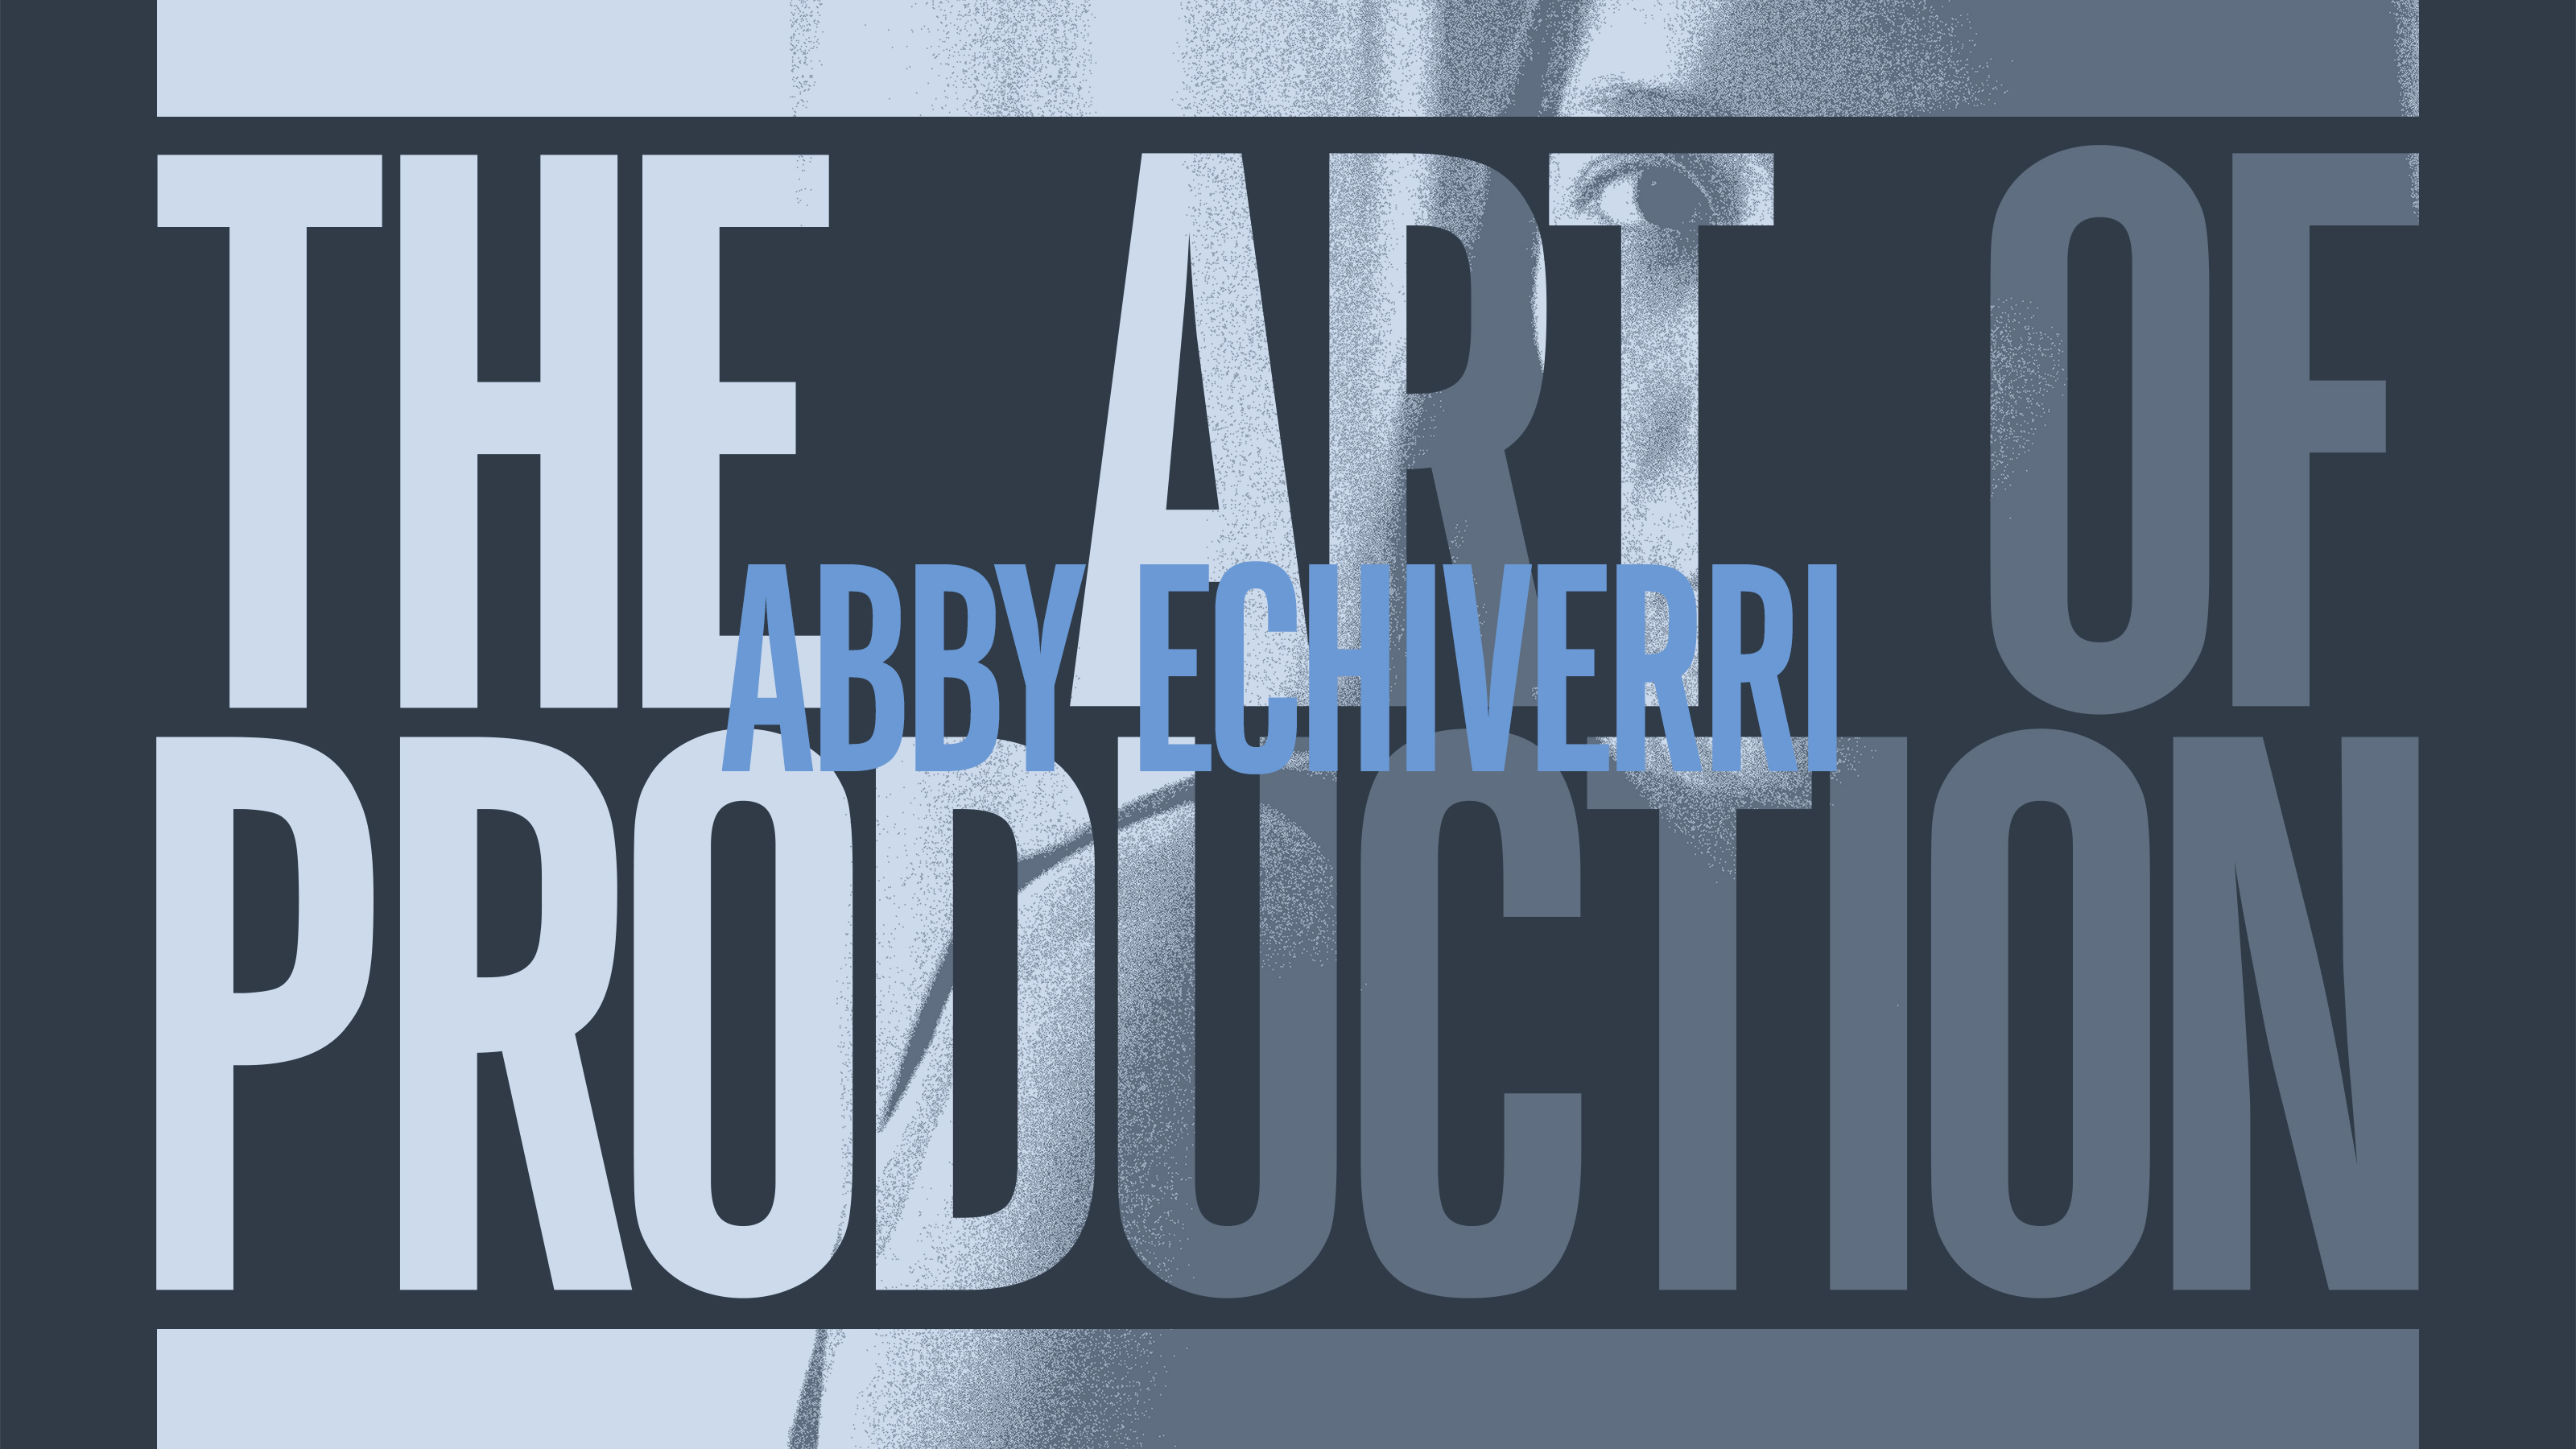 The Art Of Production: Abby Echiverri